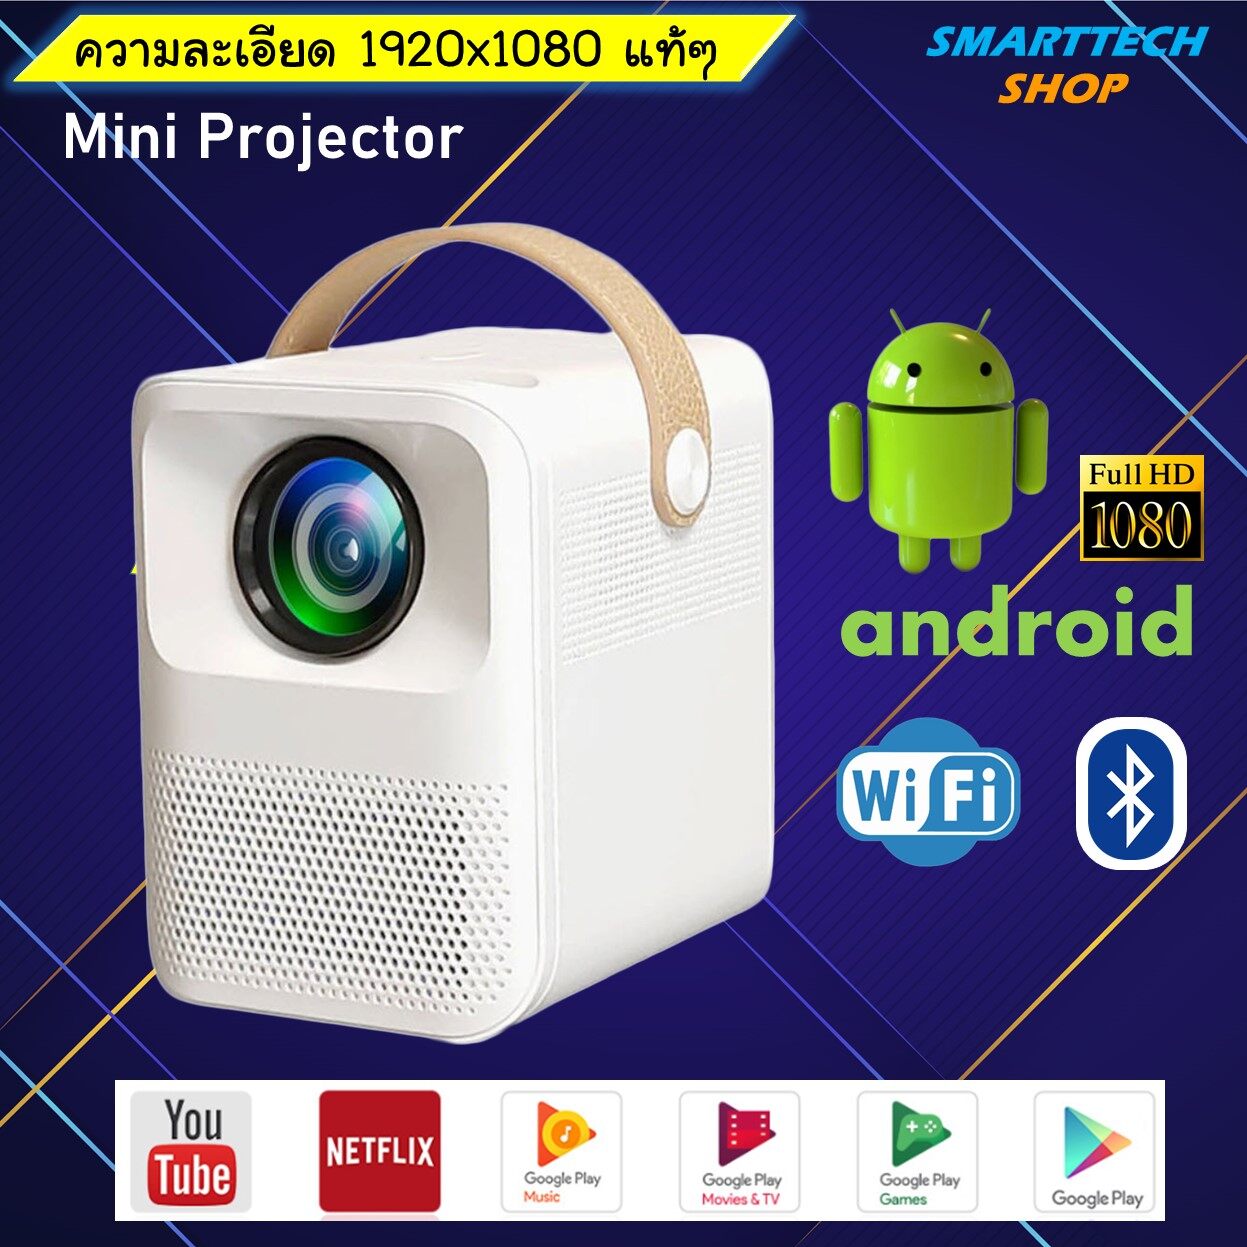 Mini Projector ความละเอียด Native1080P แท้ๆ ชัดกว่า SD150 มี android wifi Bluetooth เล่น Netflix ได้เลย